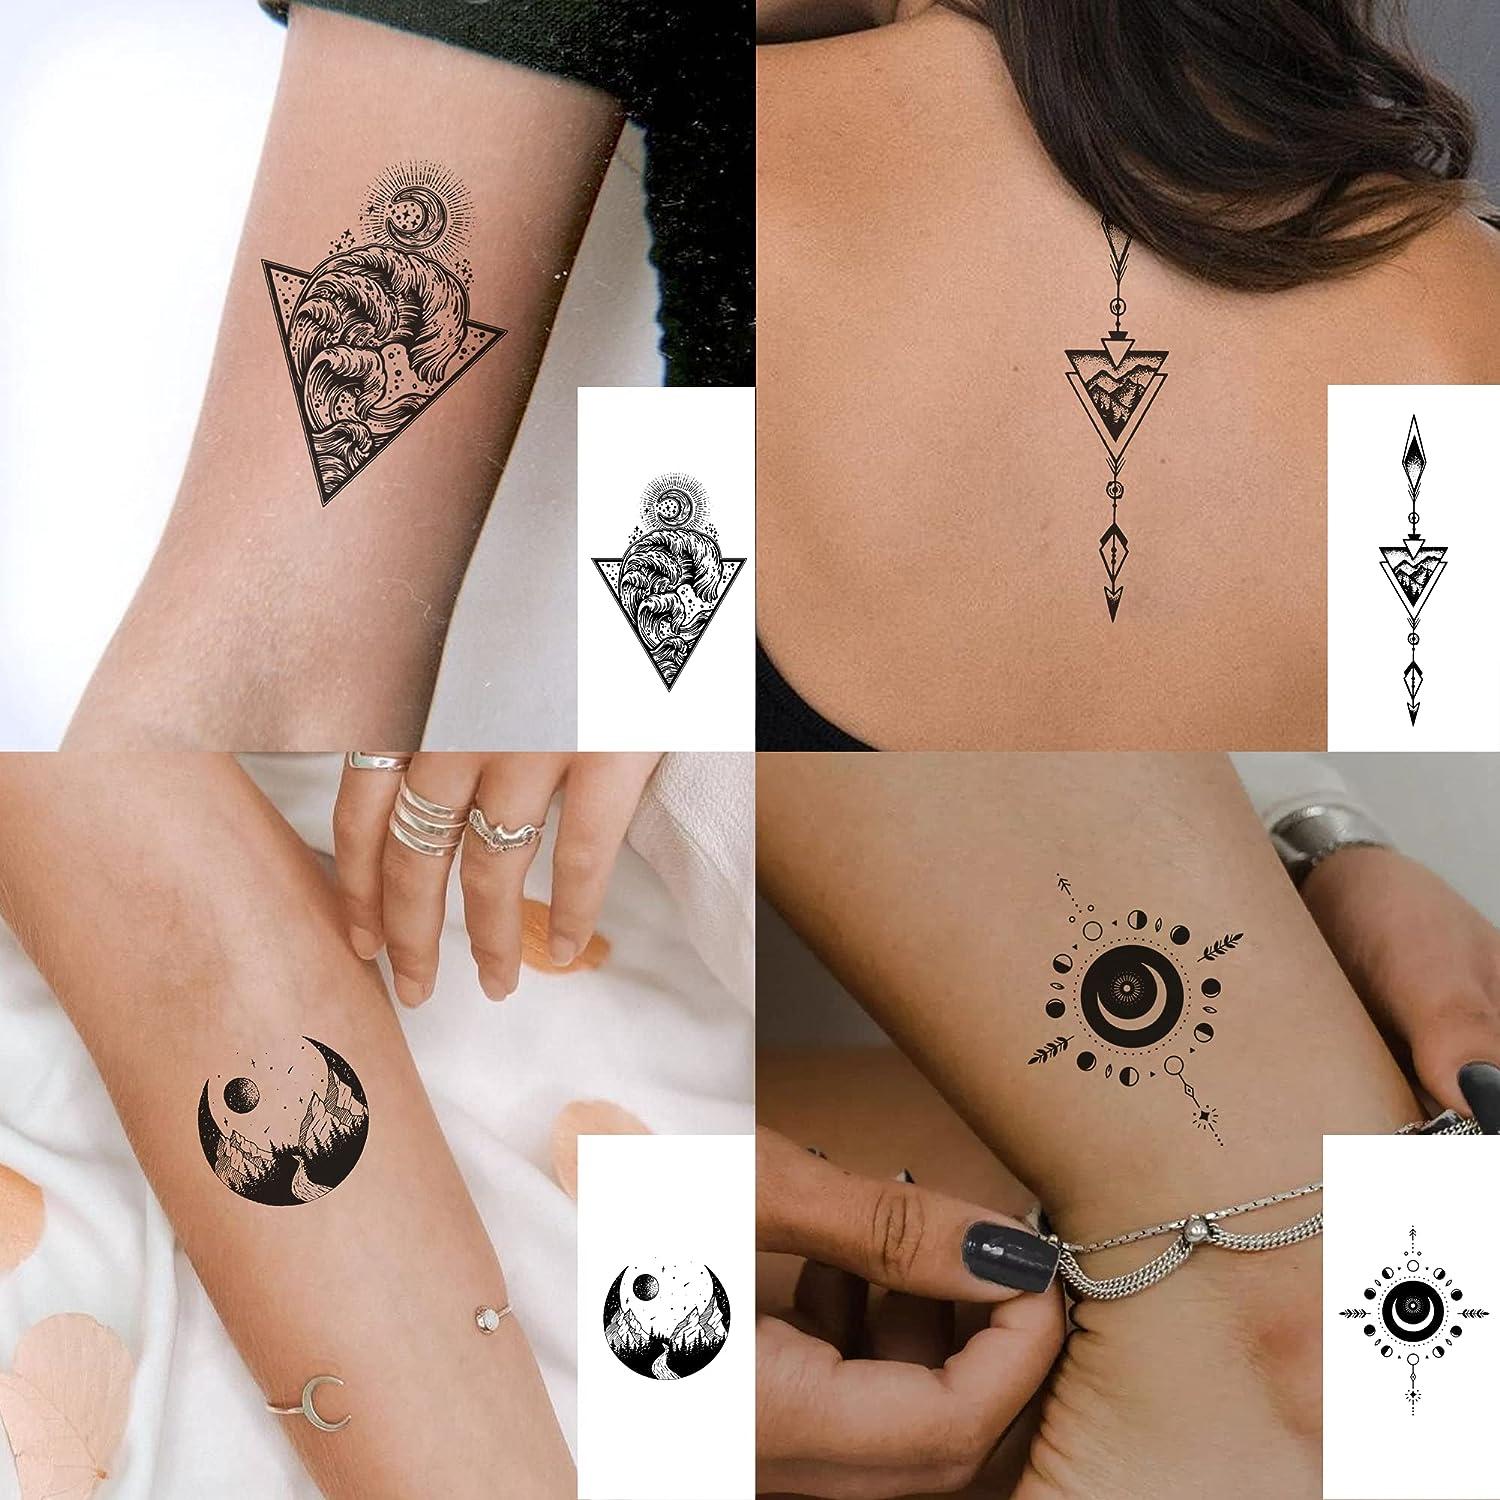 Hummingbird and Orion constellation tattoo by Bartt Tattoo | Post 19446